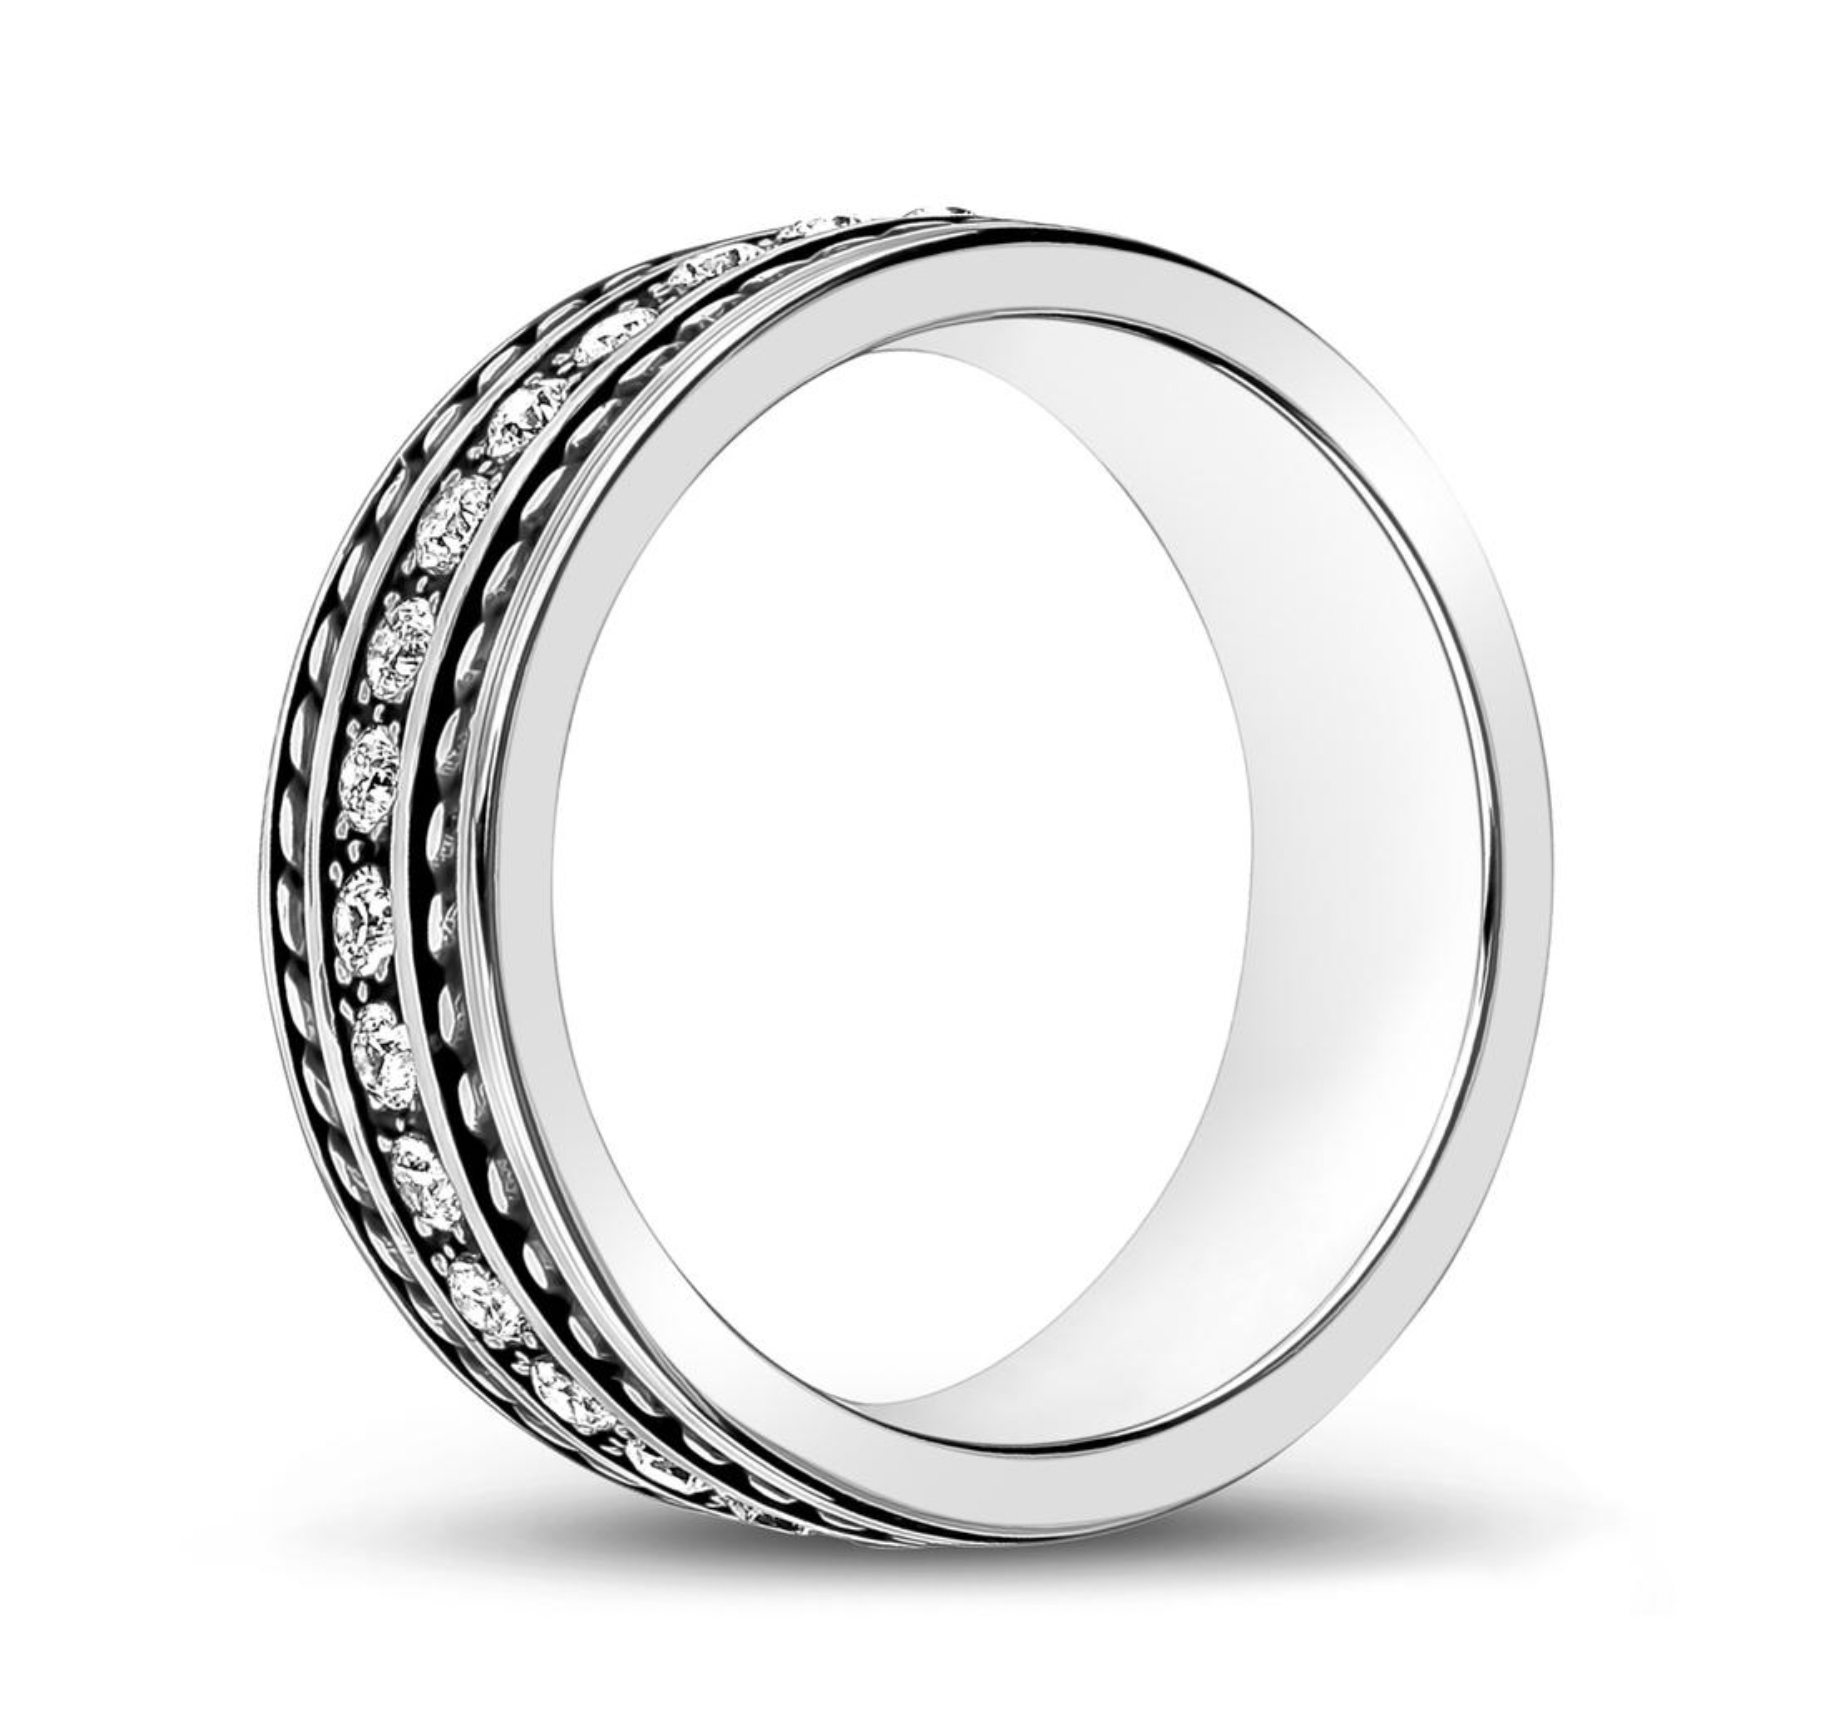 Detailed White C.Z Ring | ARZ Steel | Luby 